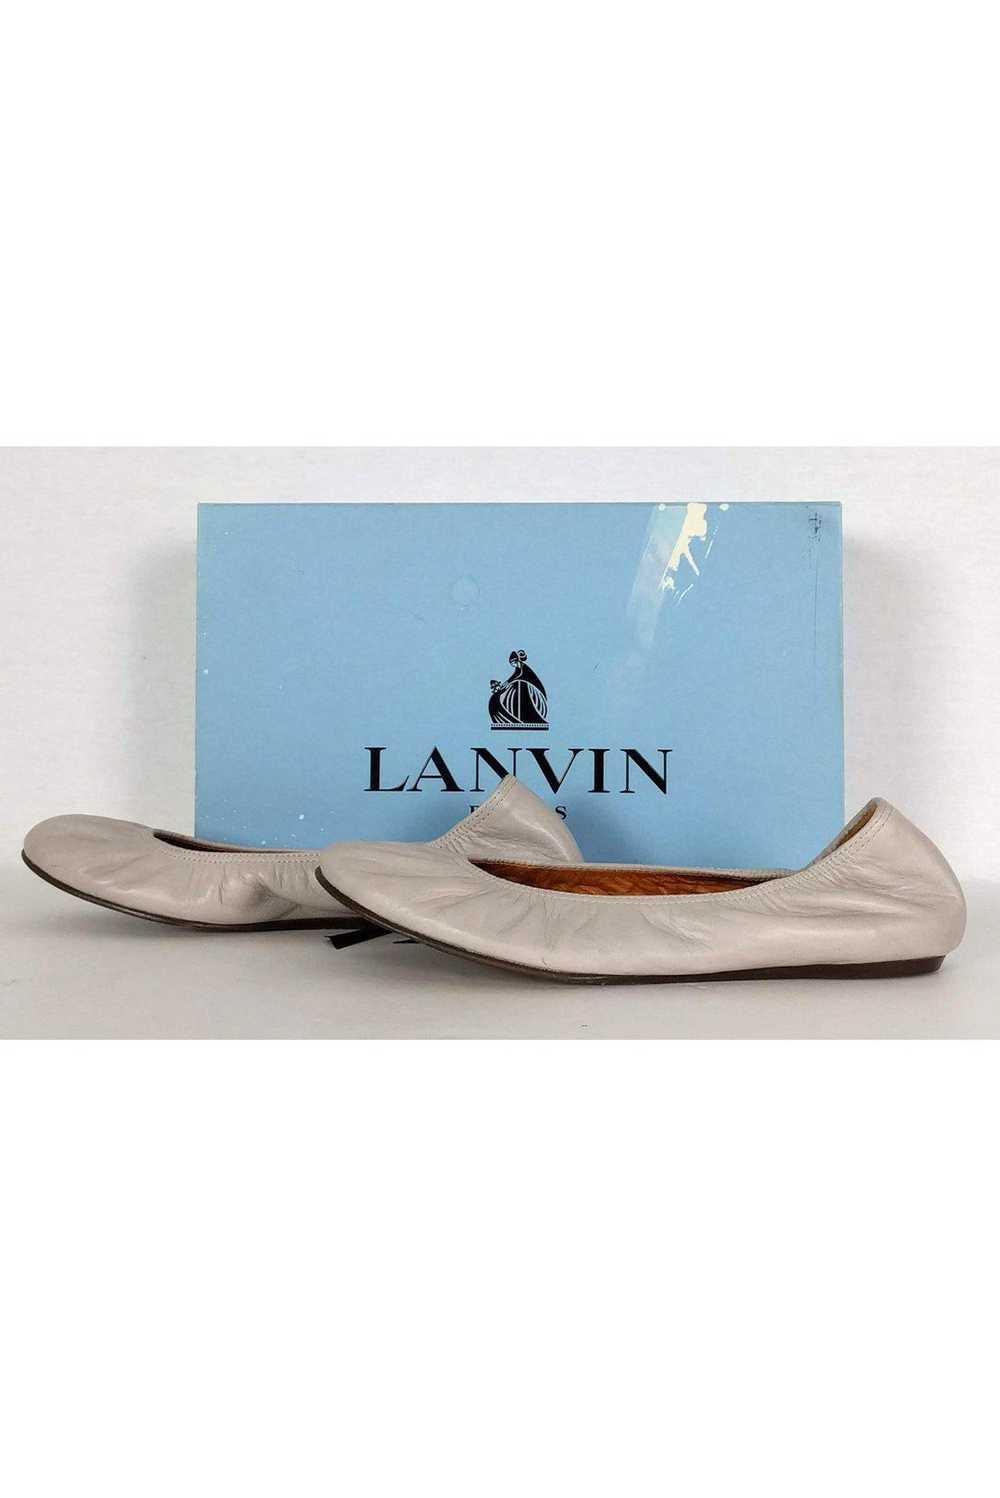 Lanvin - Light Grey Leather Ballet Flats Sz 6 - image 3